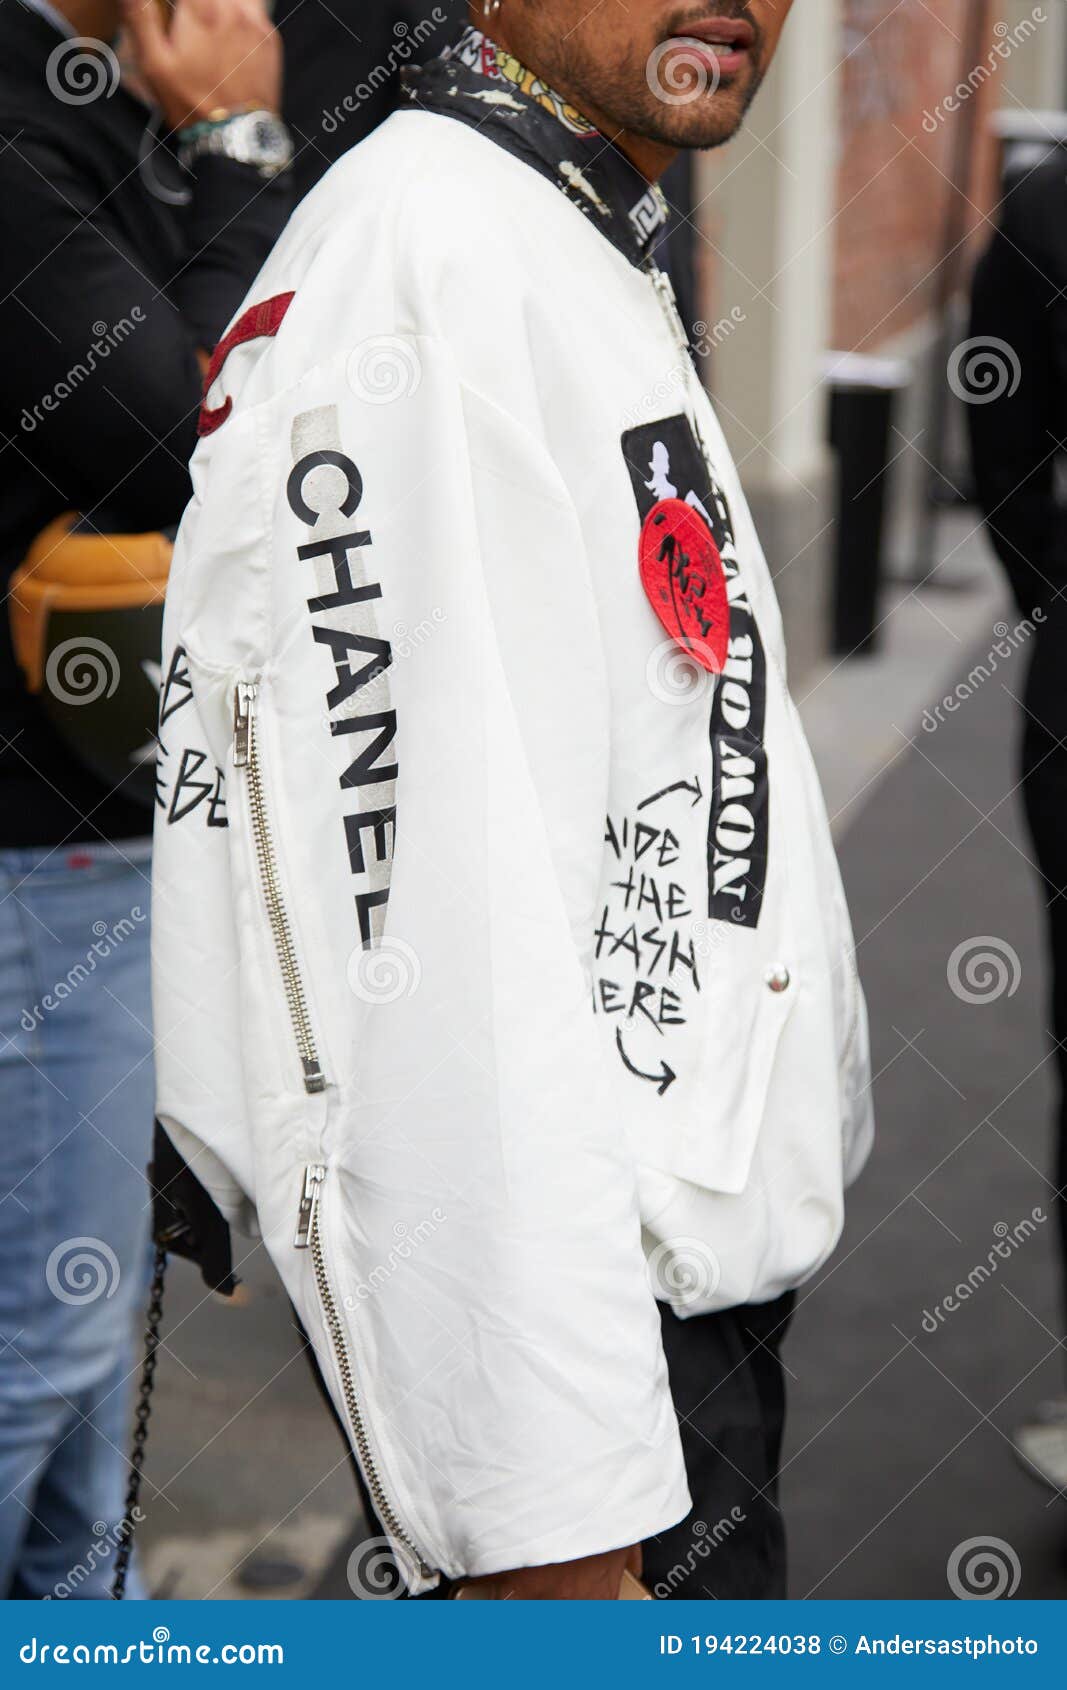 Man with White Chanel Bomber Jacket before Fendi Fashion Show, Milan Fashion Week Style Editorial Photo - Image of fashion, outfit: 194224038